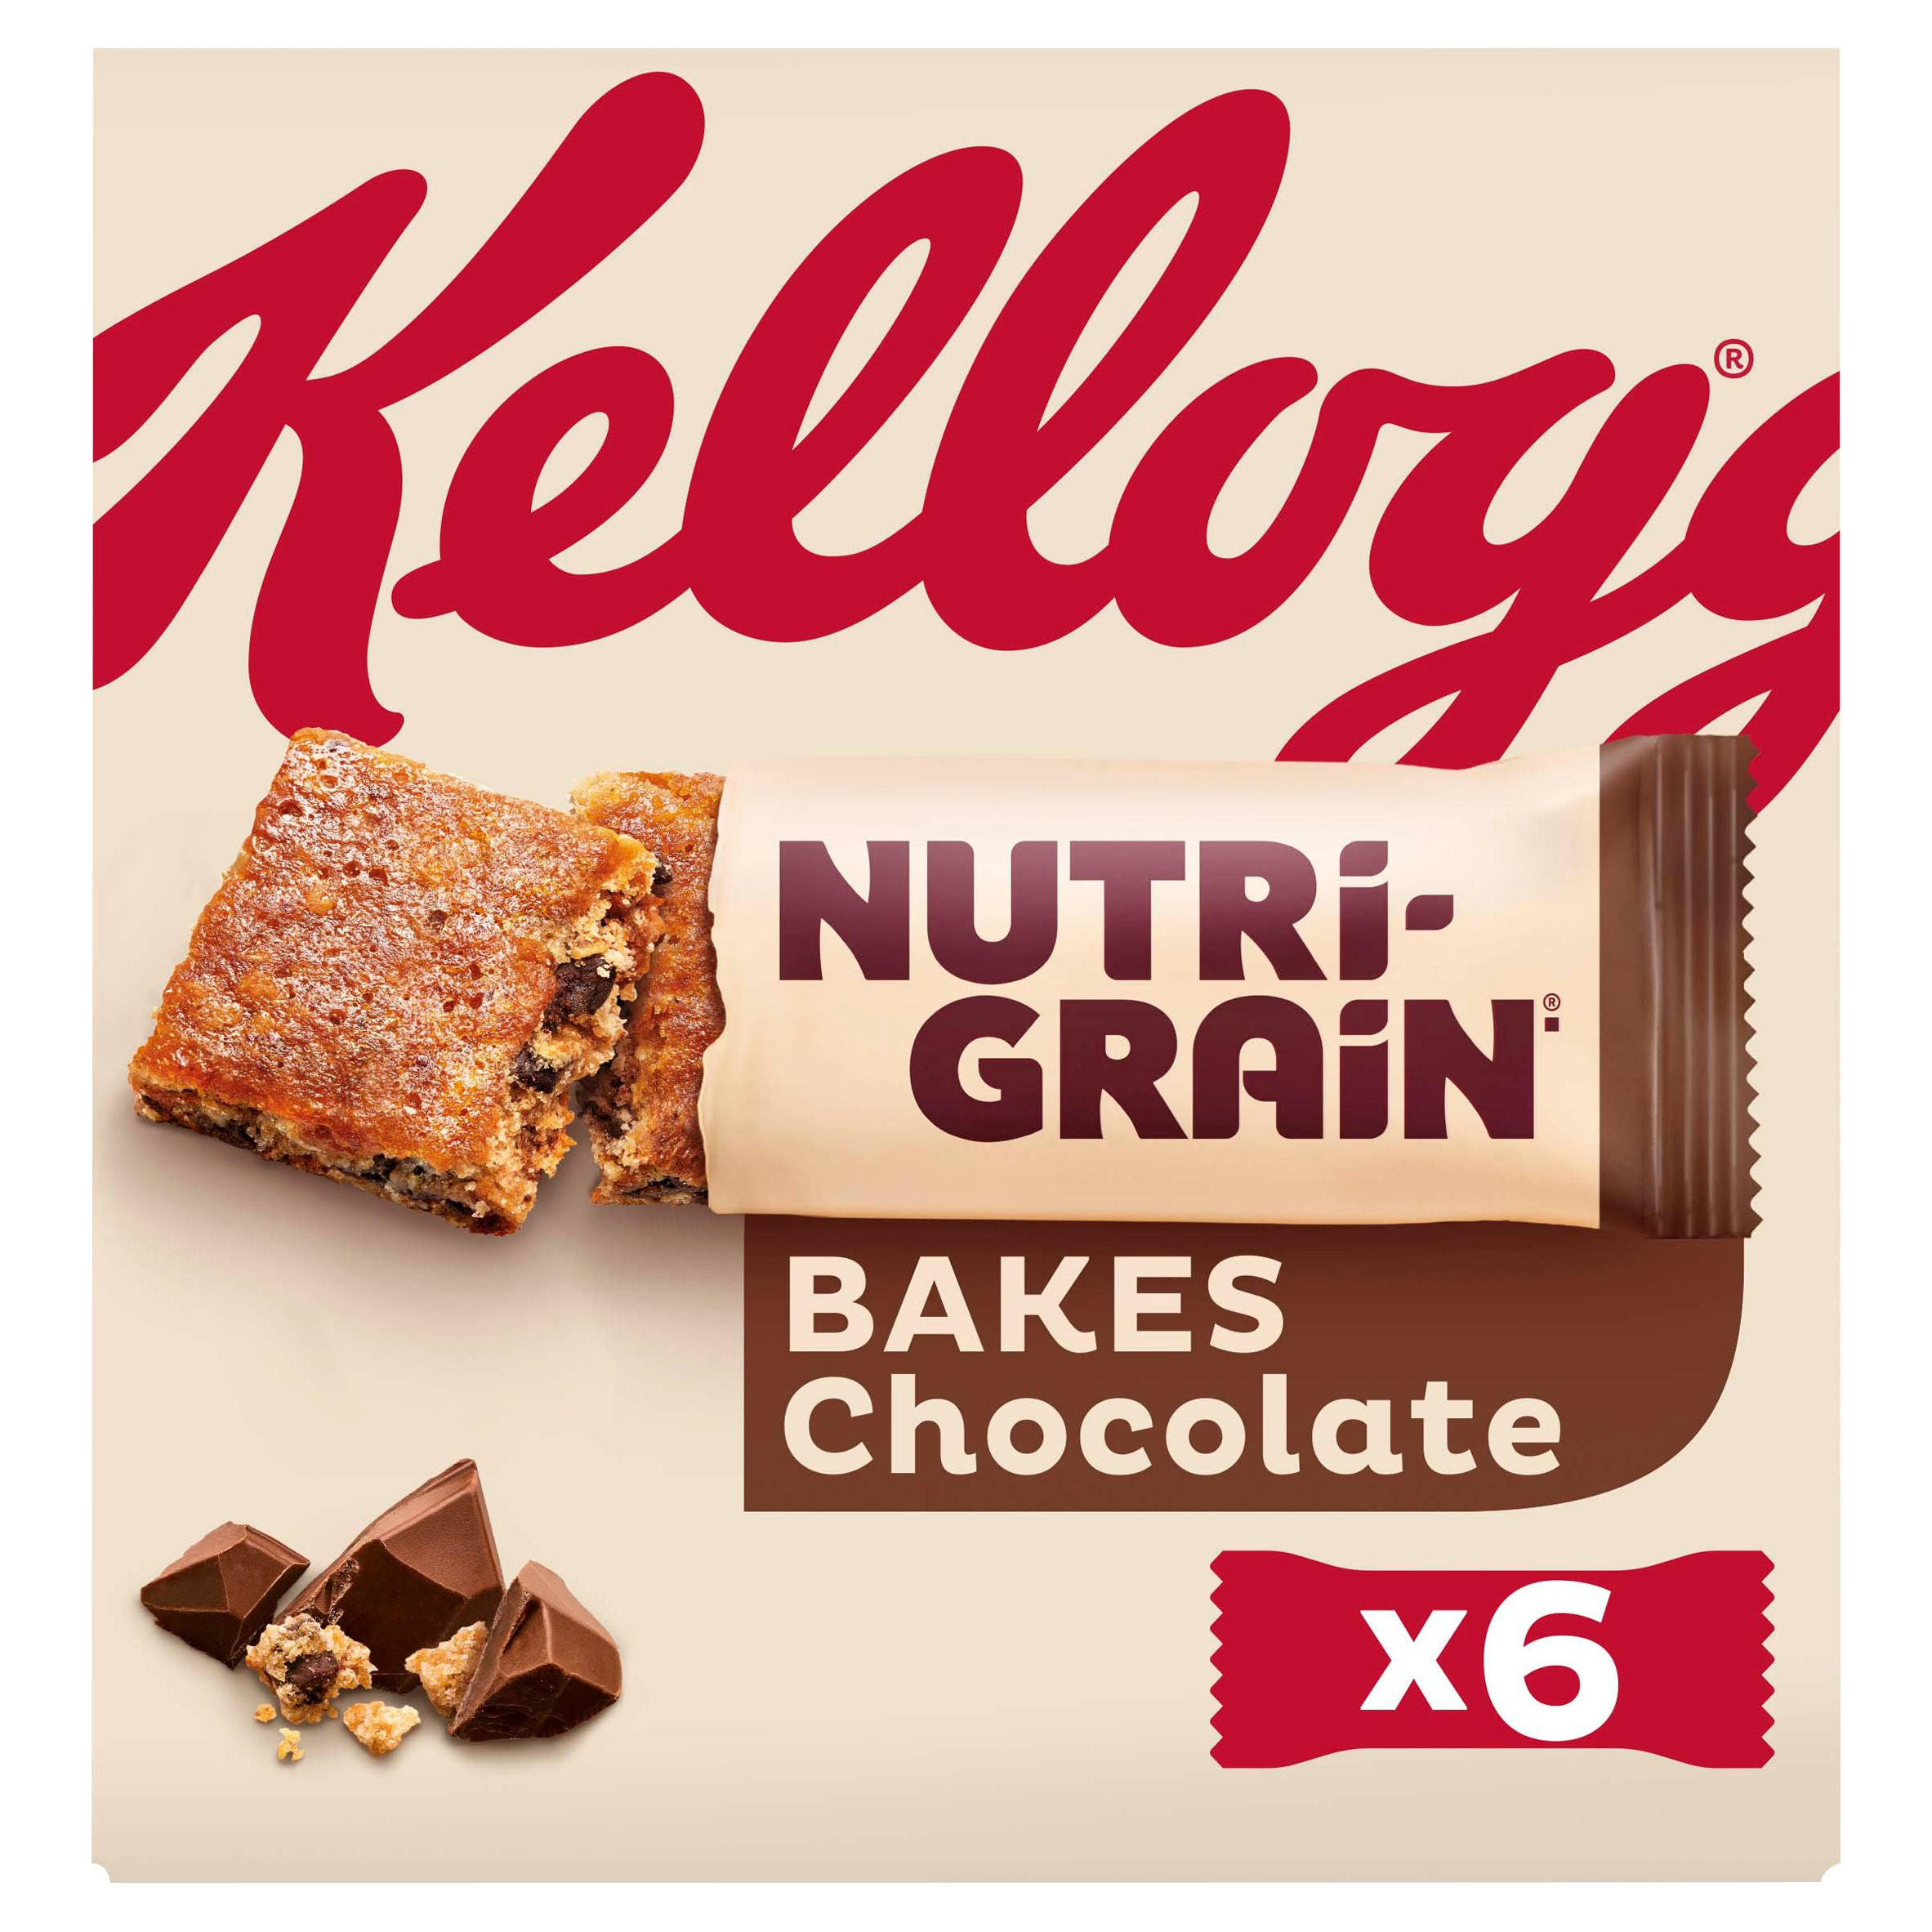 Kellogg's Pop Tarts Choctastic Breakfast Pastry Snack 8x48g